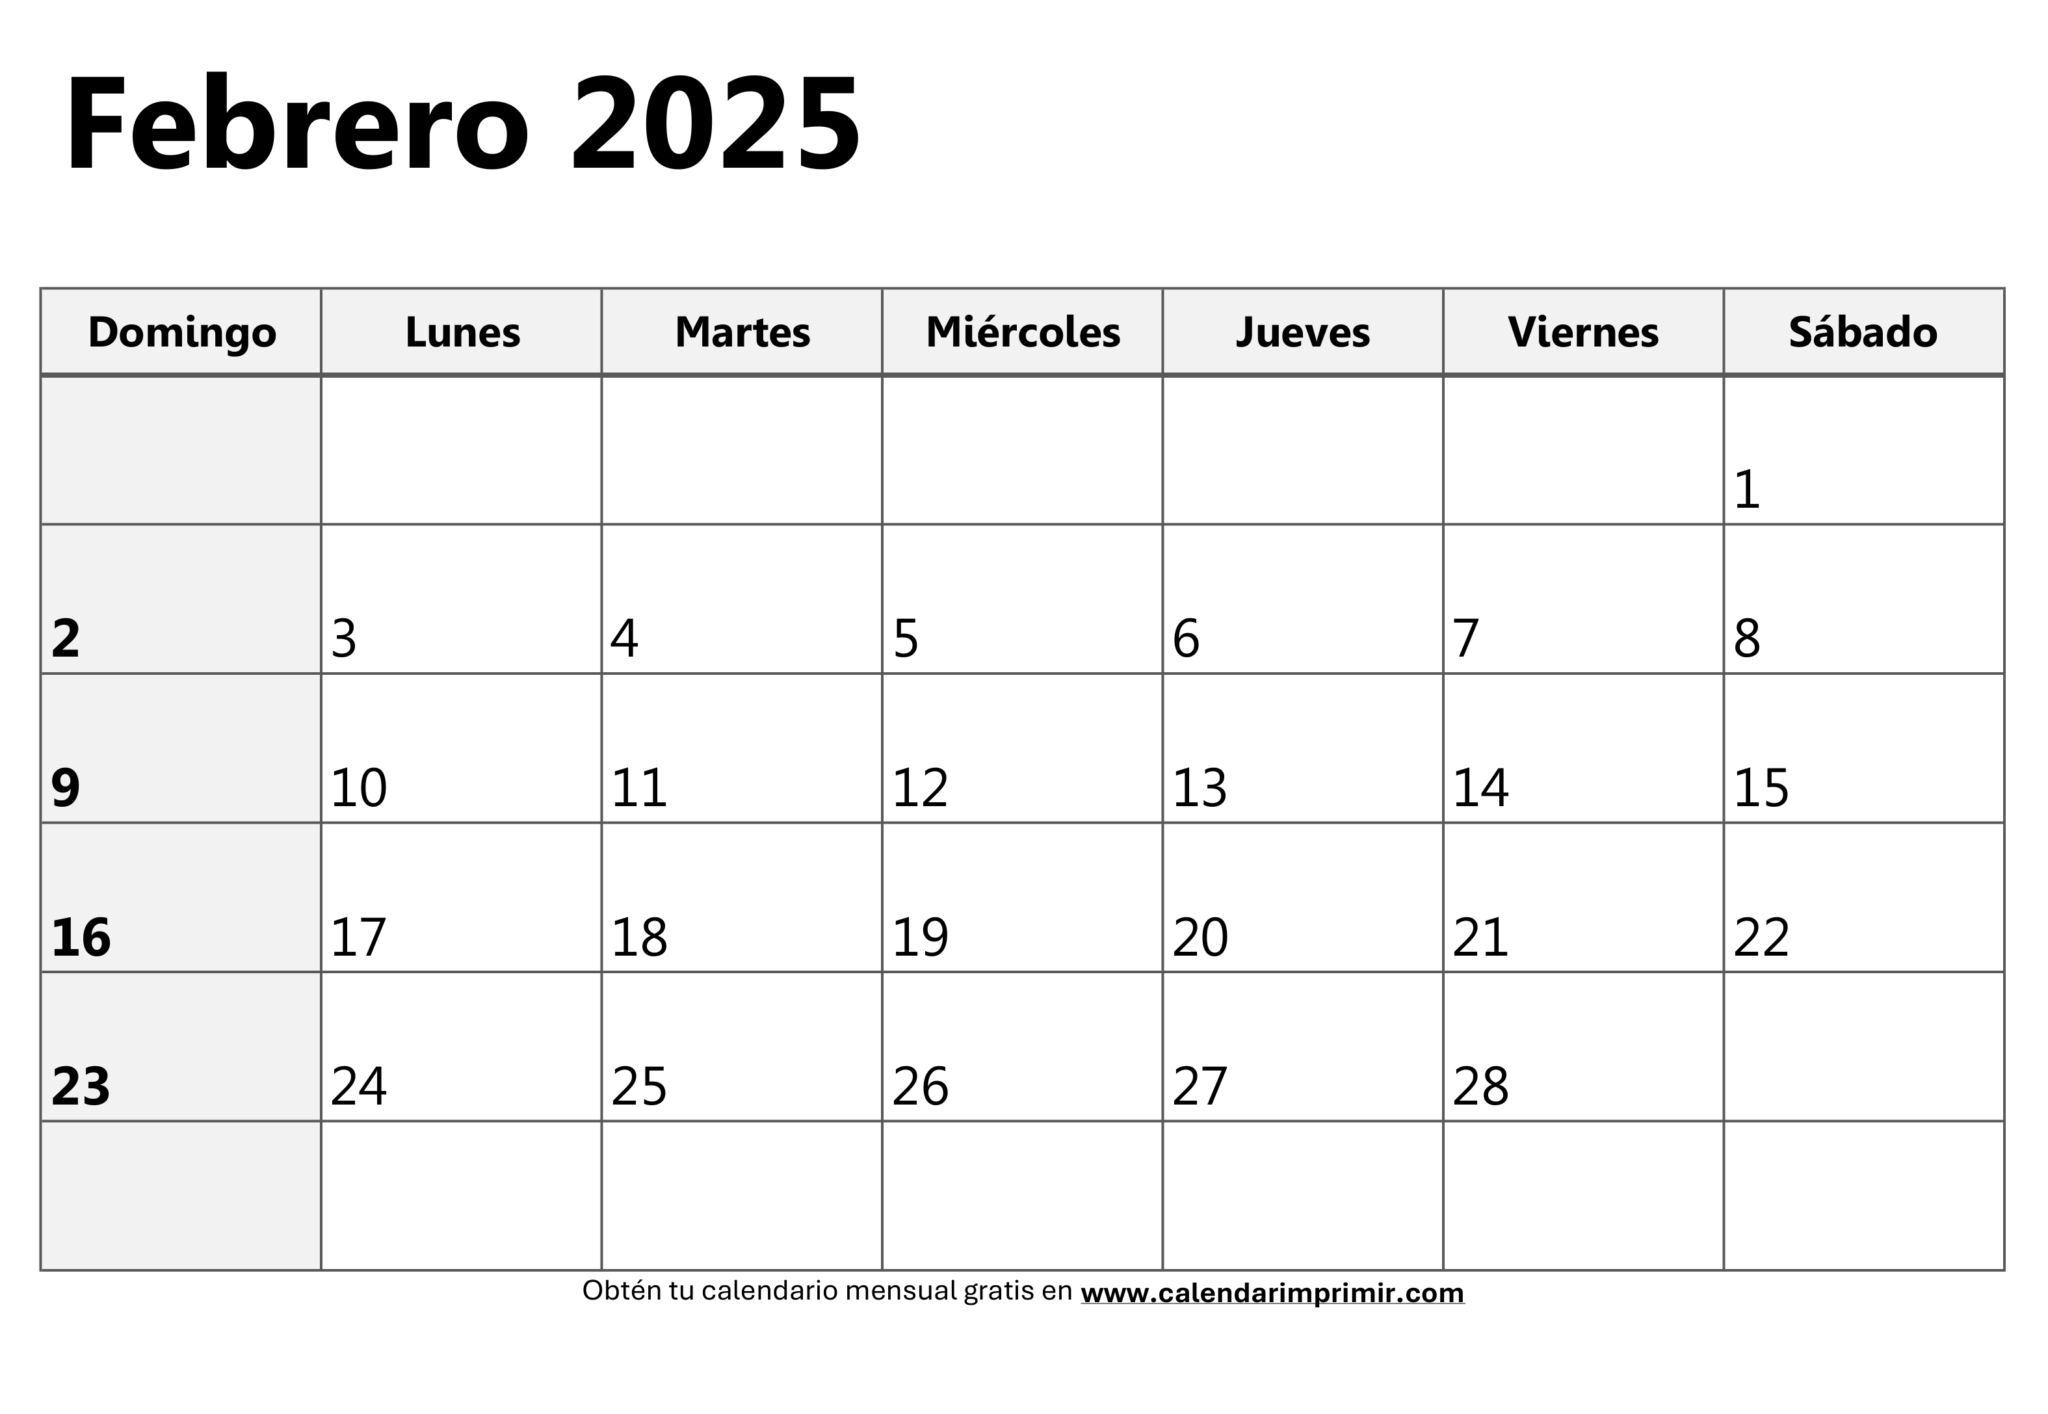 Calendario Mensual 2025 Para Imprimir Calendar Imprimir 9510